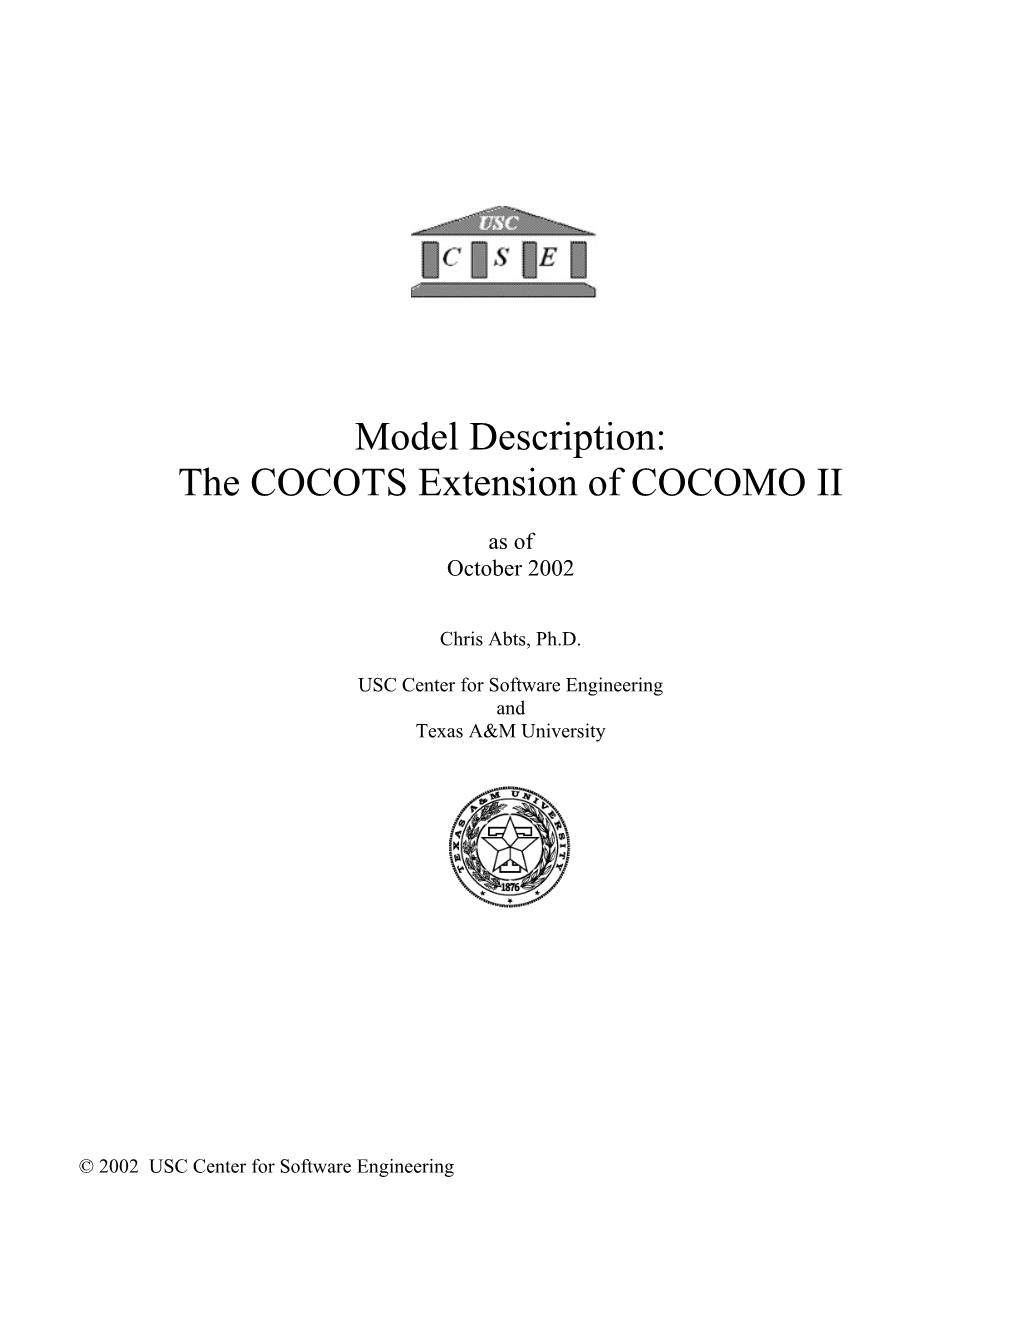 Model Description: the COCOTS Extension of COCOMO II